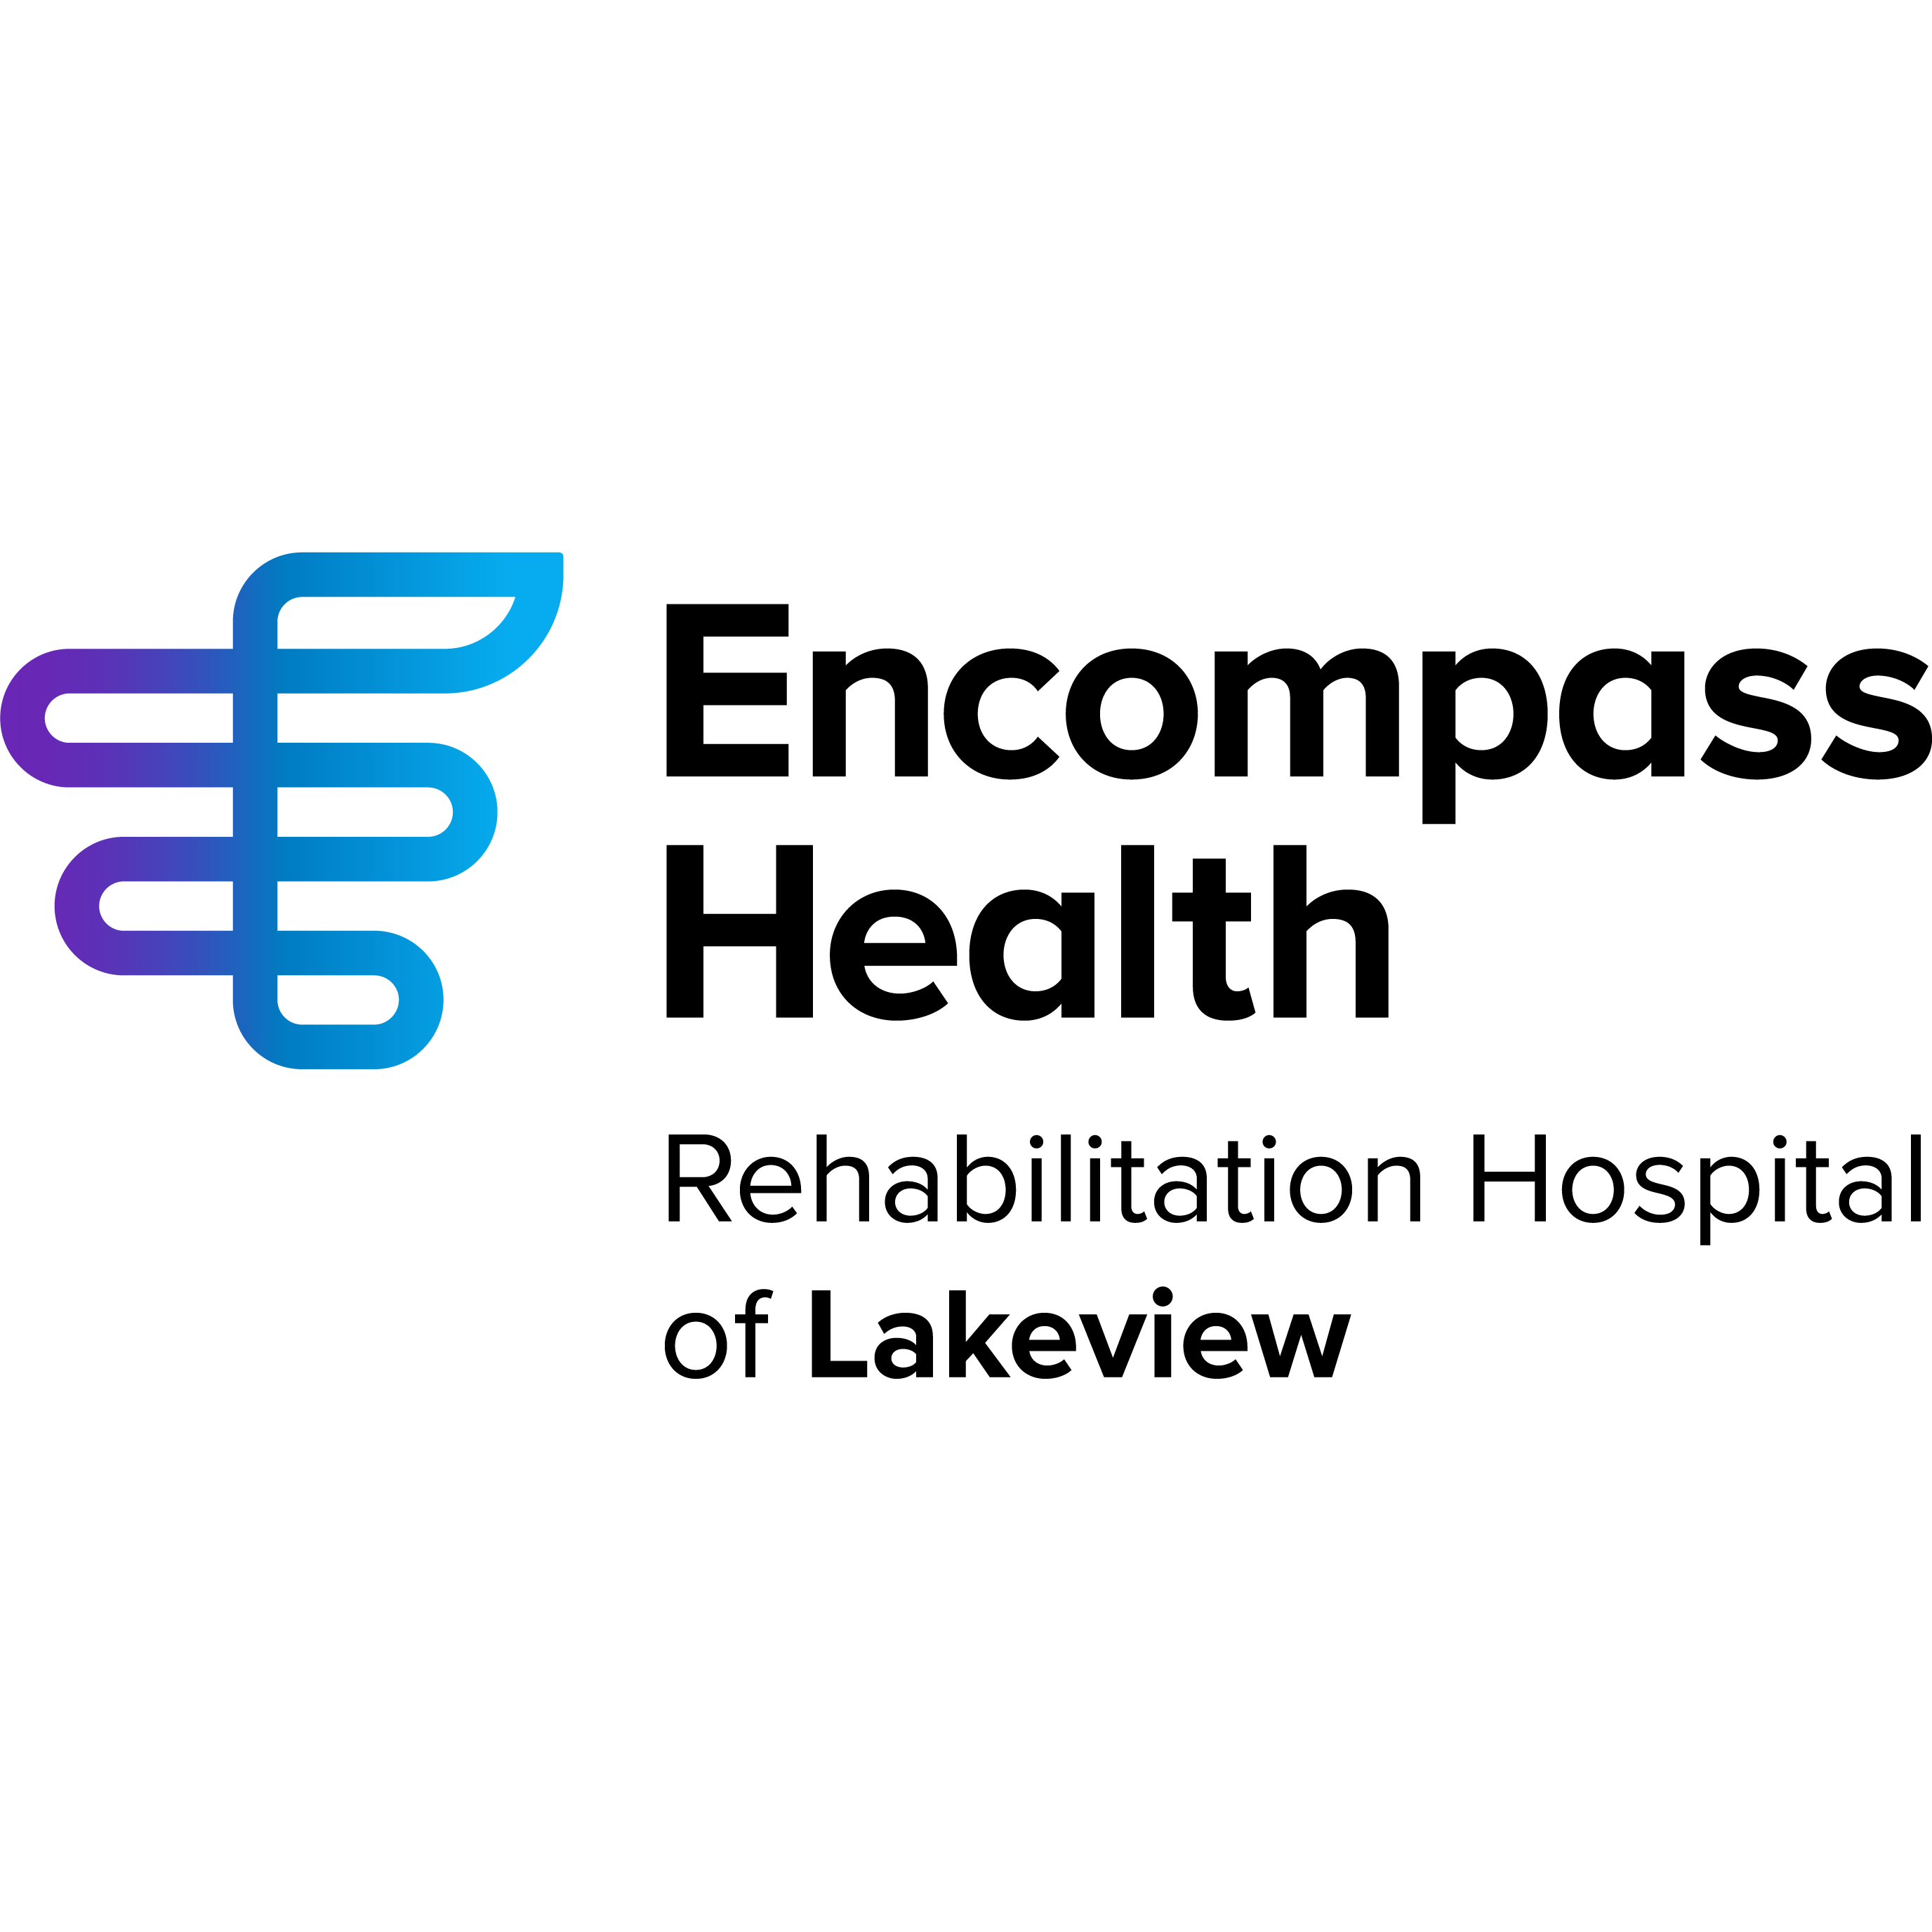 Encompass Health Rehabilitation Hospital of Lakeview Logo